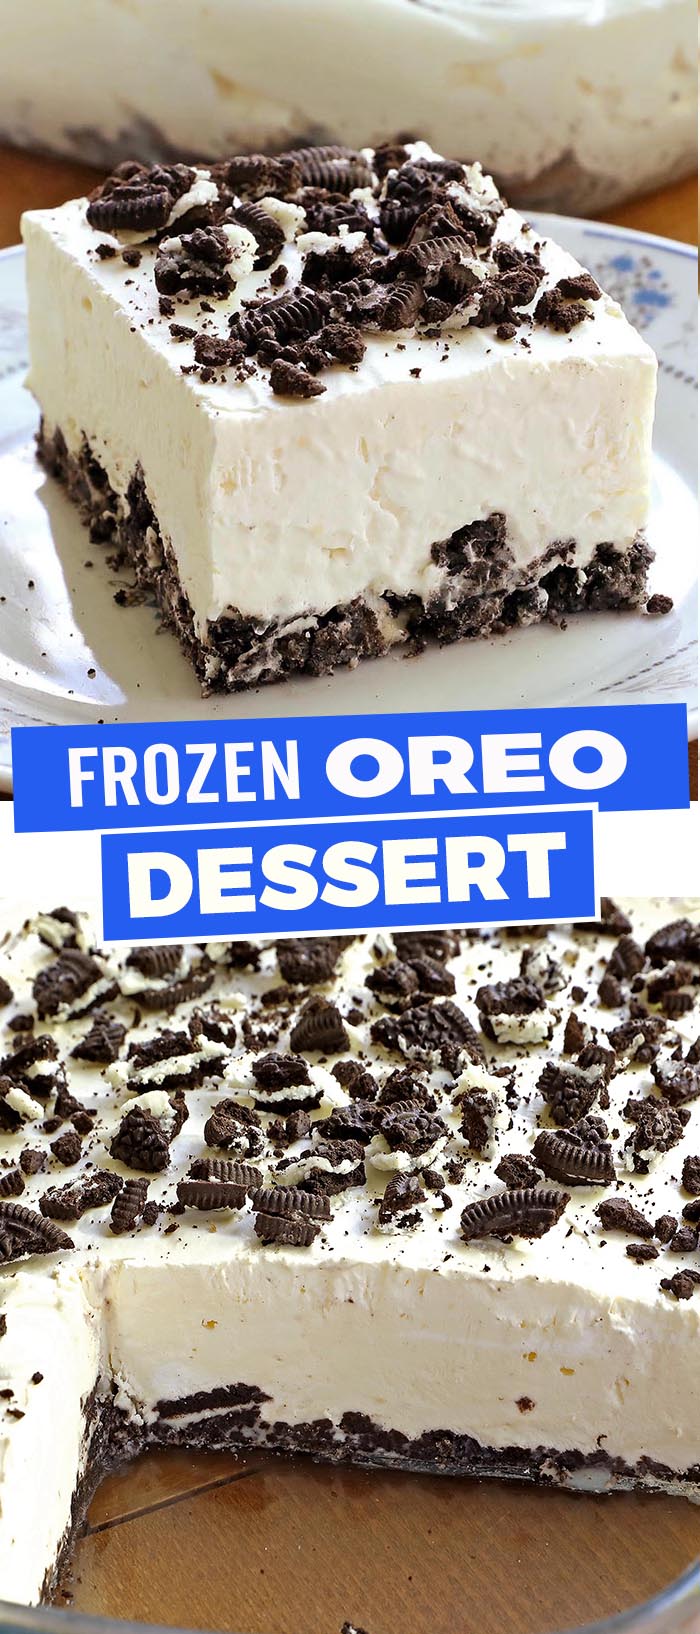 Frozen Oreo Dessert - Cakescottage